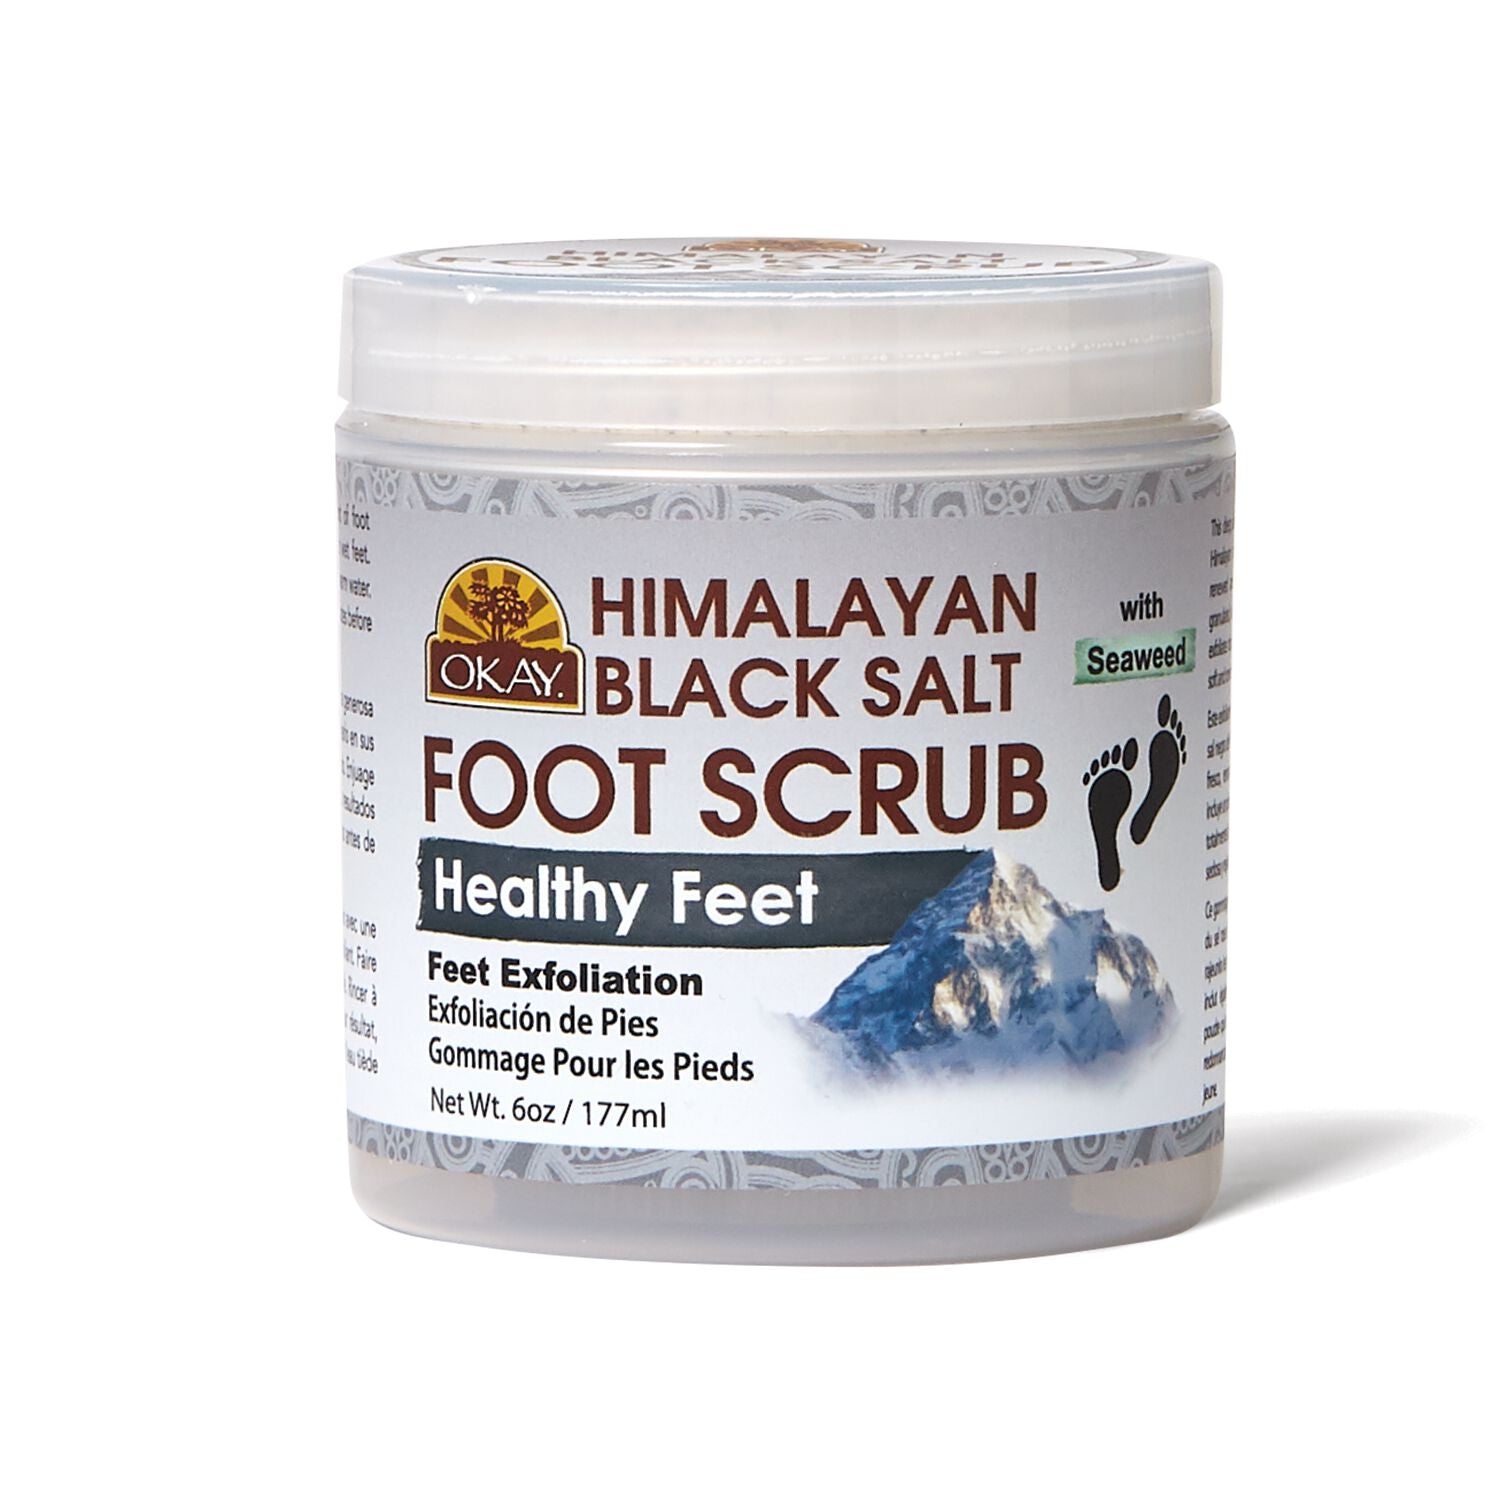 OKAY Himalayan Black Salt Foot Scrub